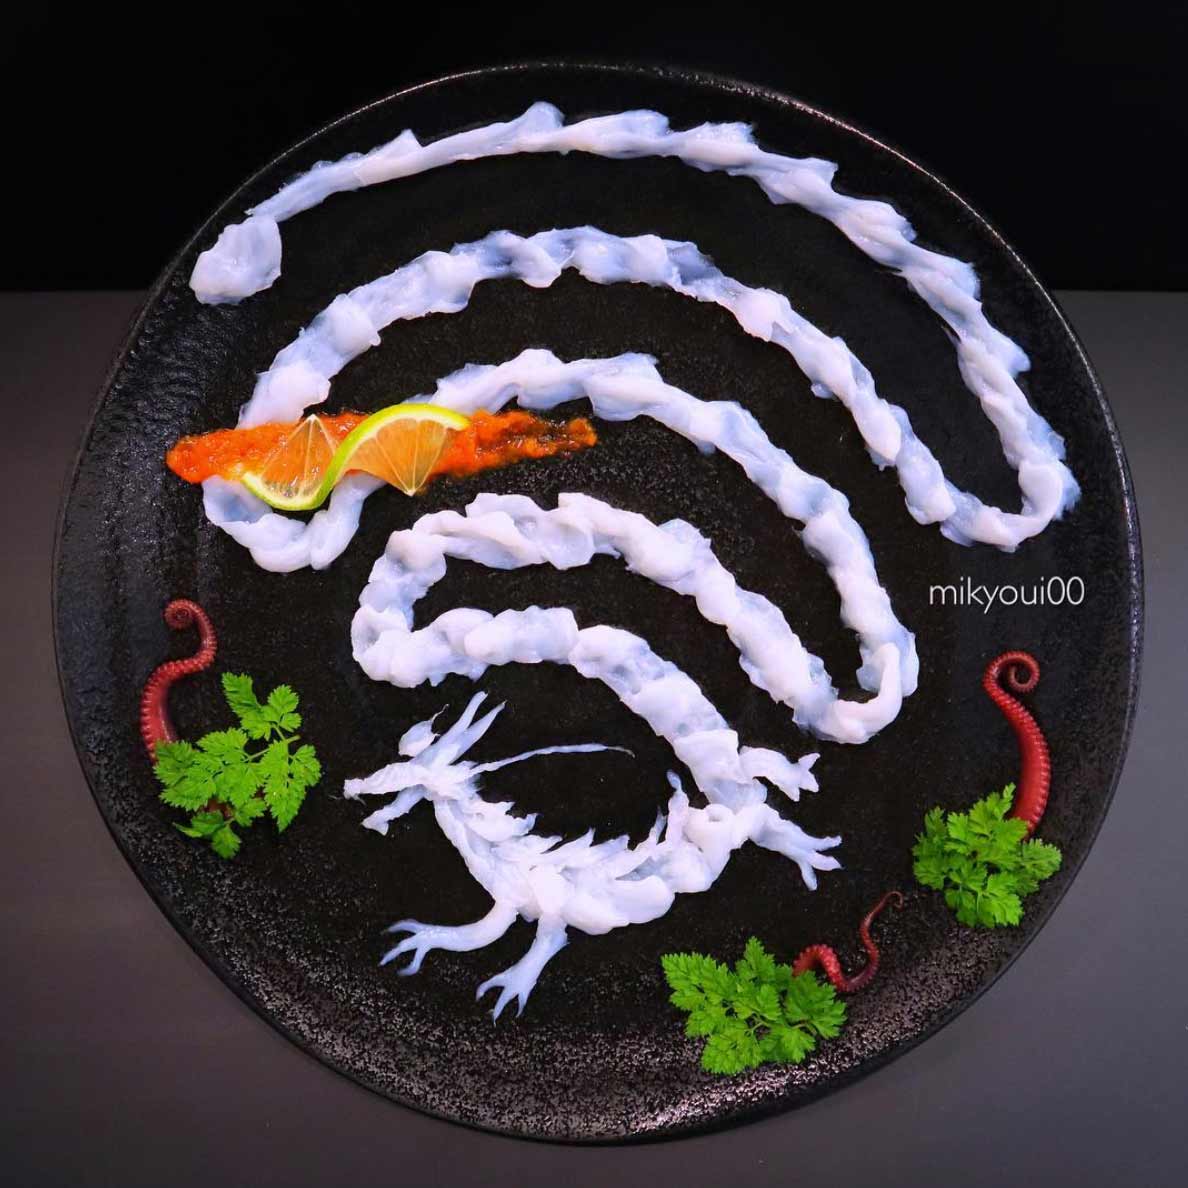 Wundervolle Sashimi-Kunstwerke von mikyou mikyou-sashimi-art-sushi-fischbilder_07 